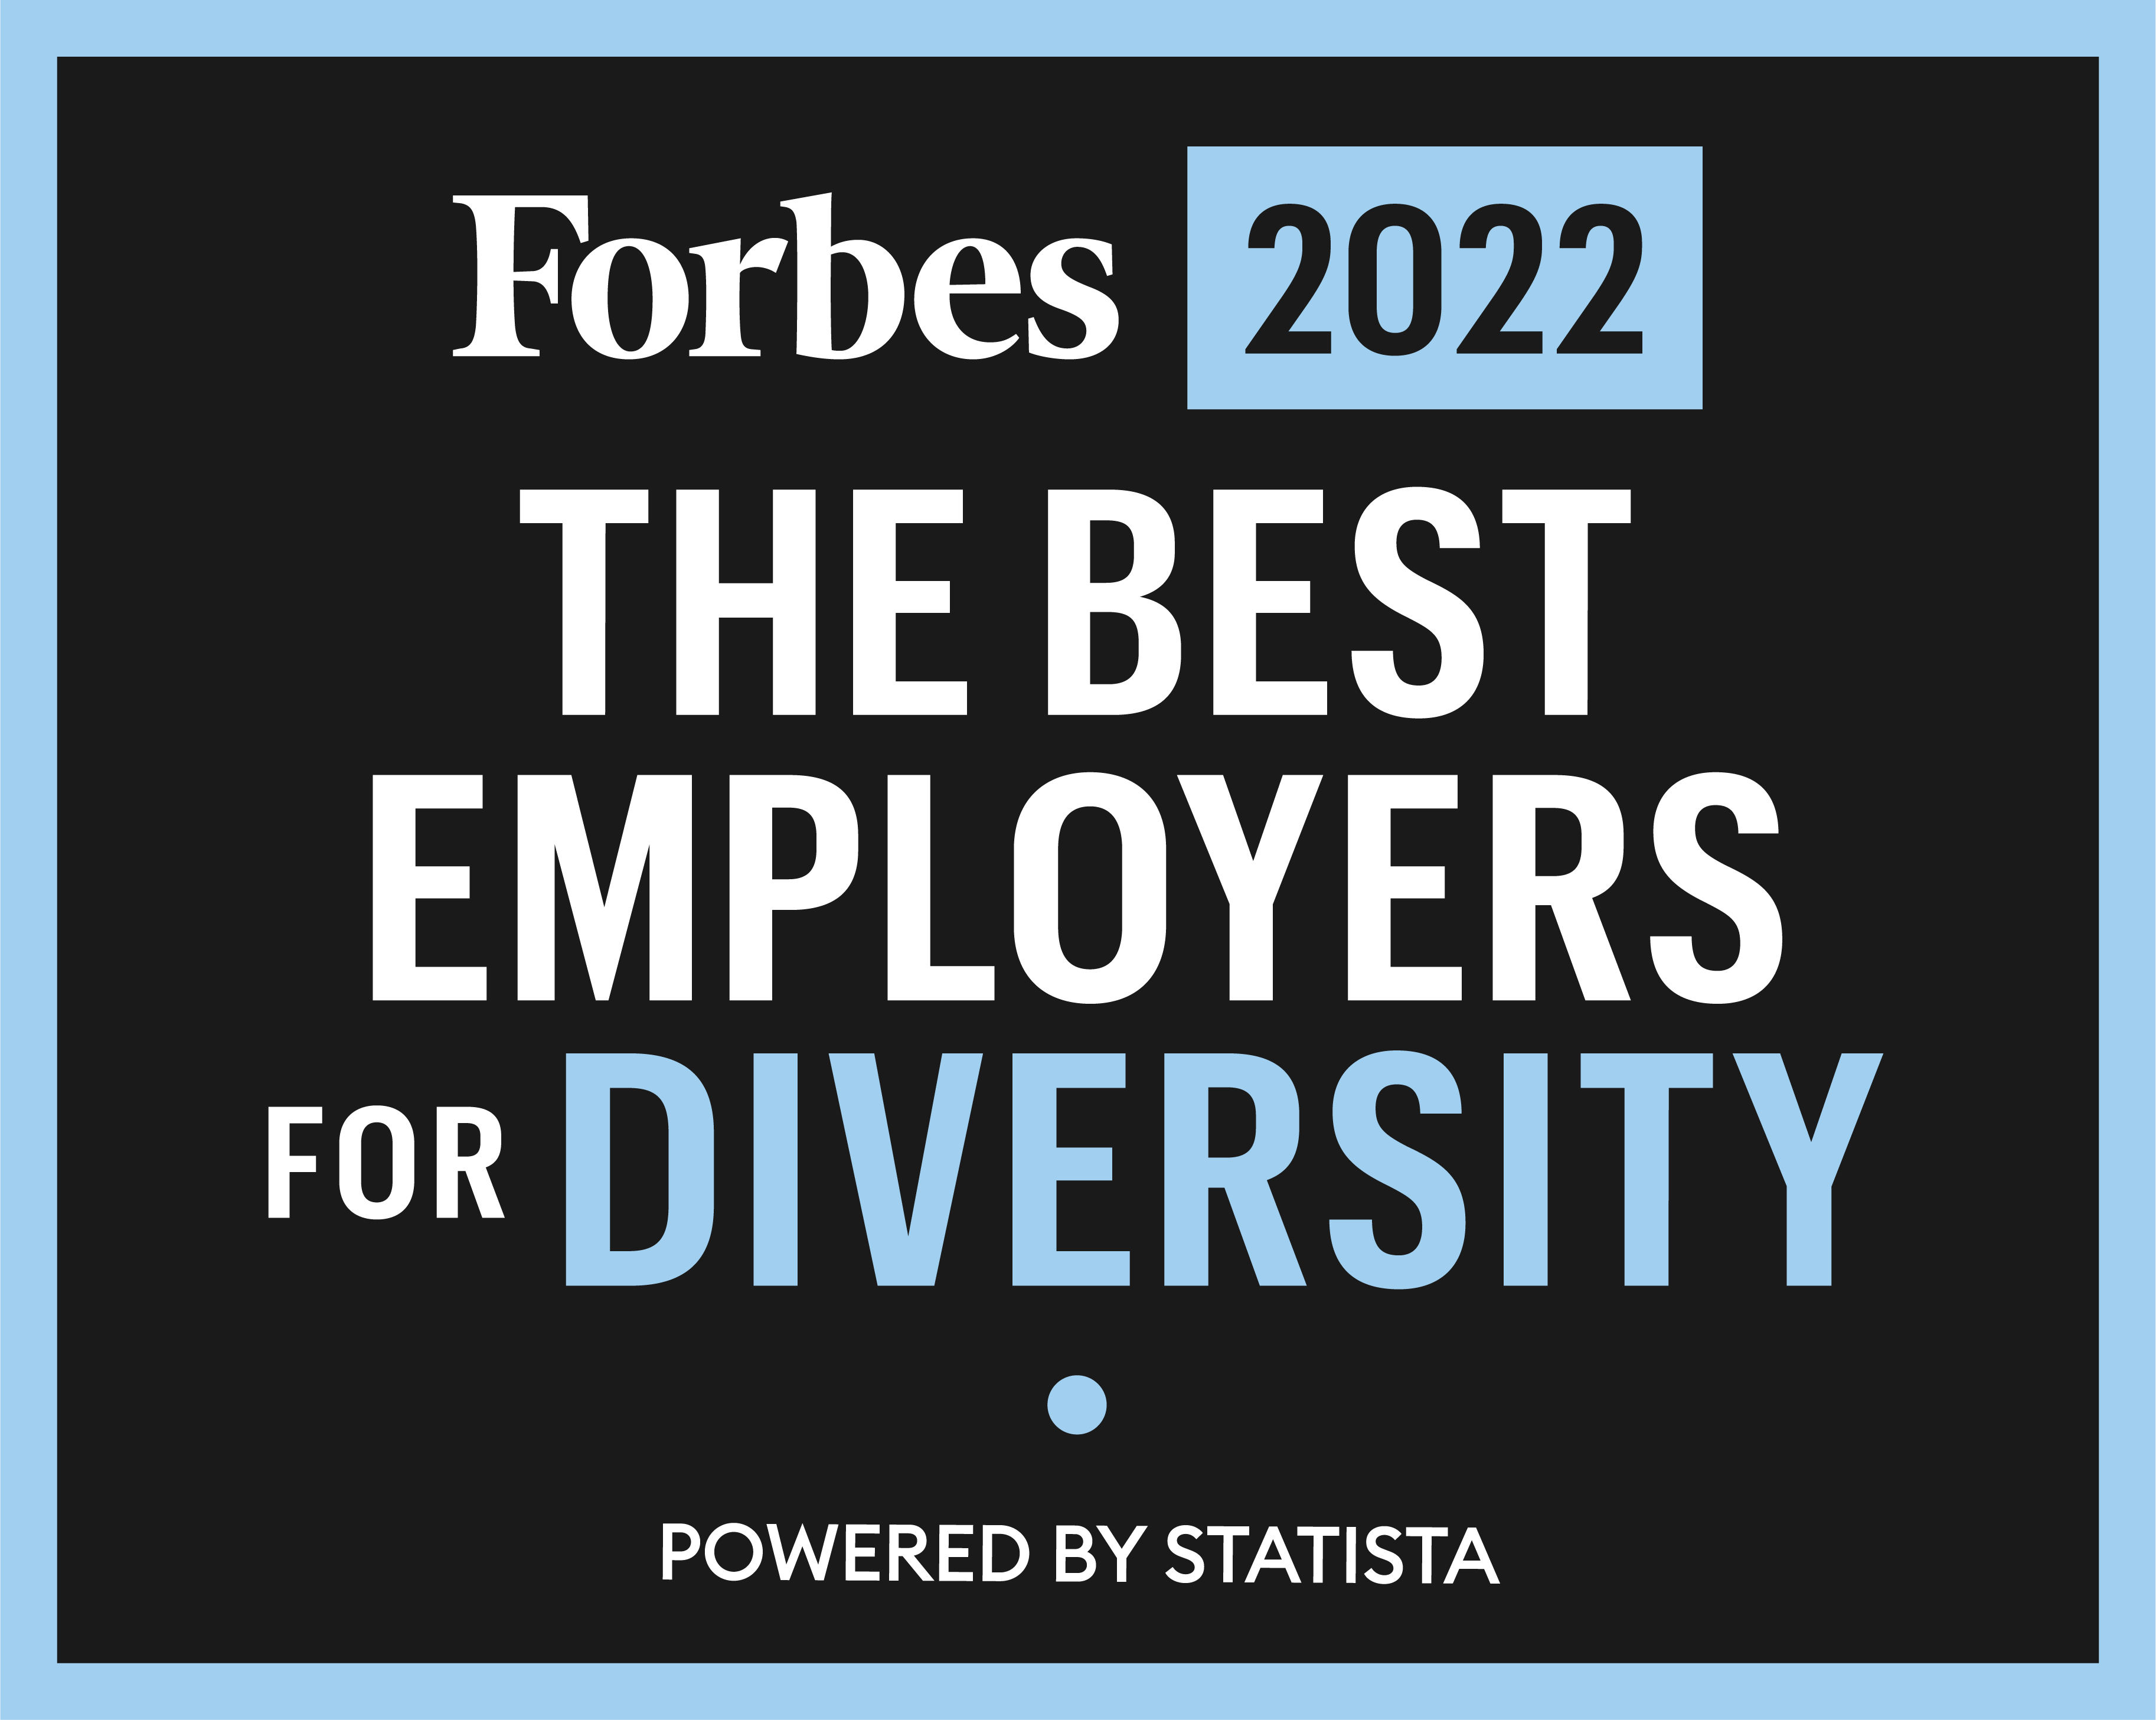 Award certificate for best diversity employers 2022